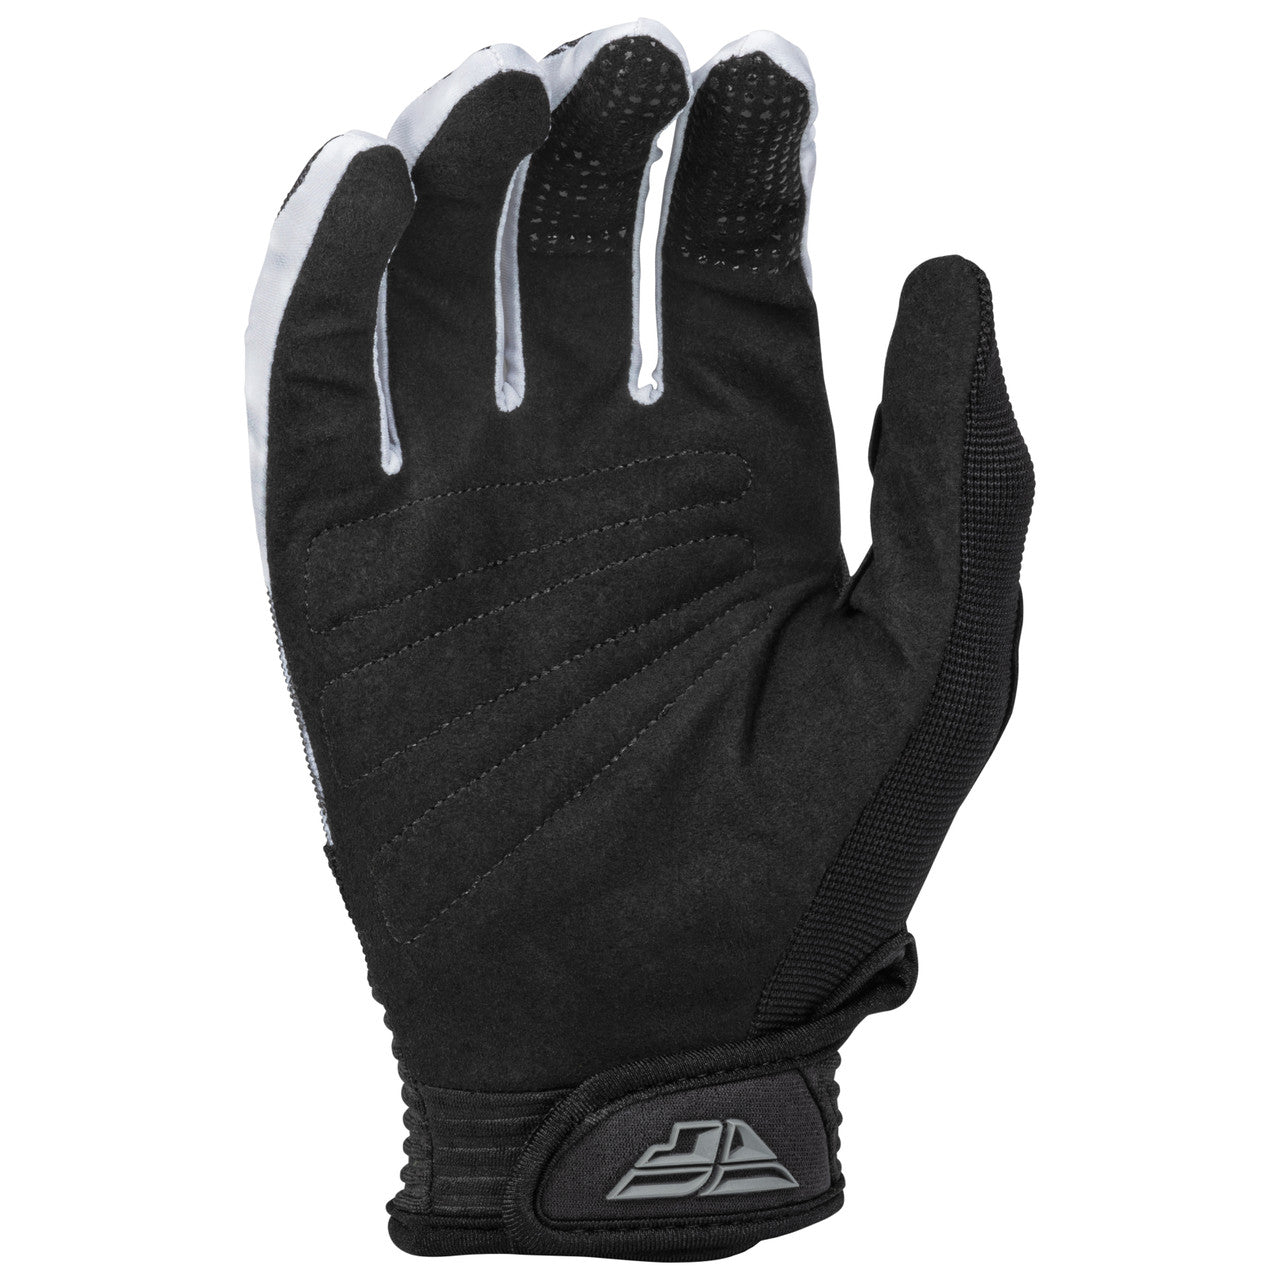 Fly F-16 YOUTH MX Gloves Grey/Black